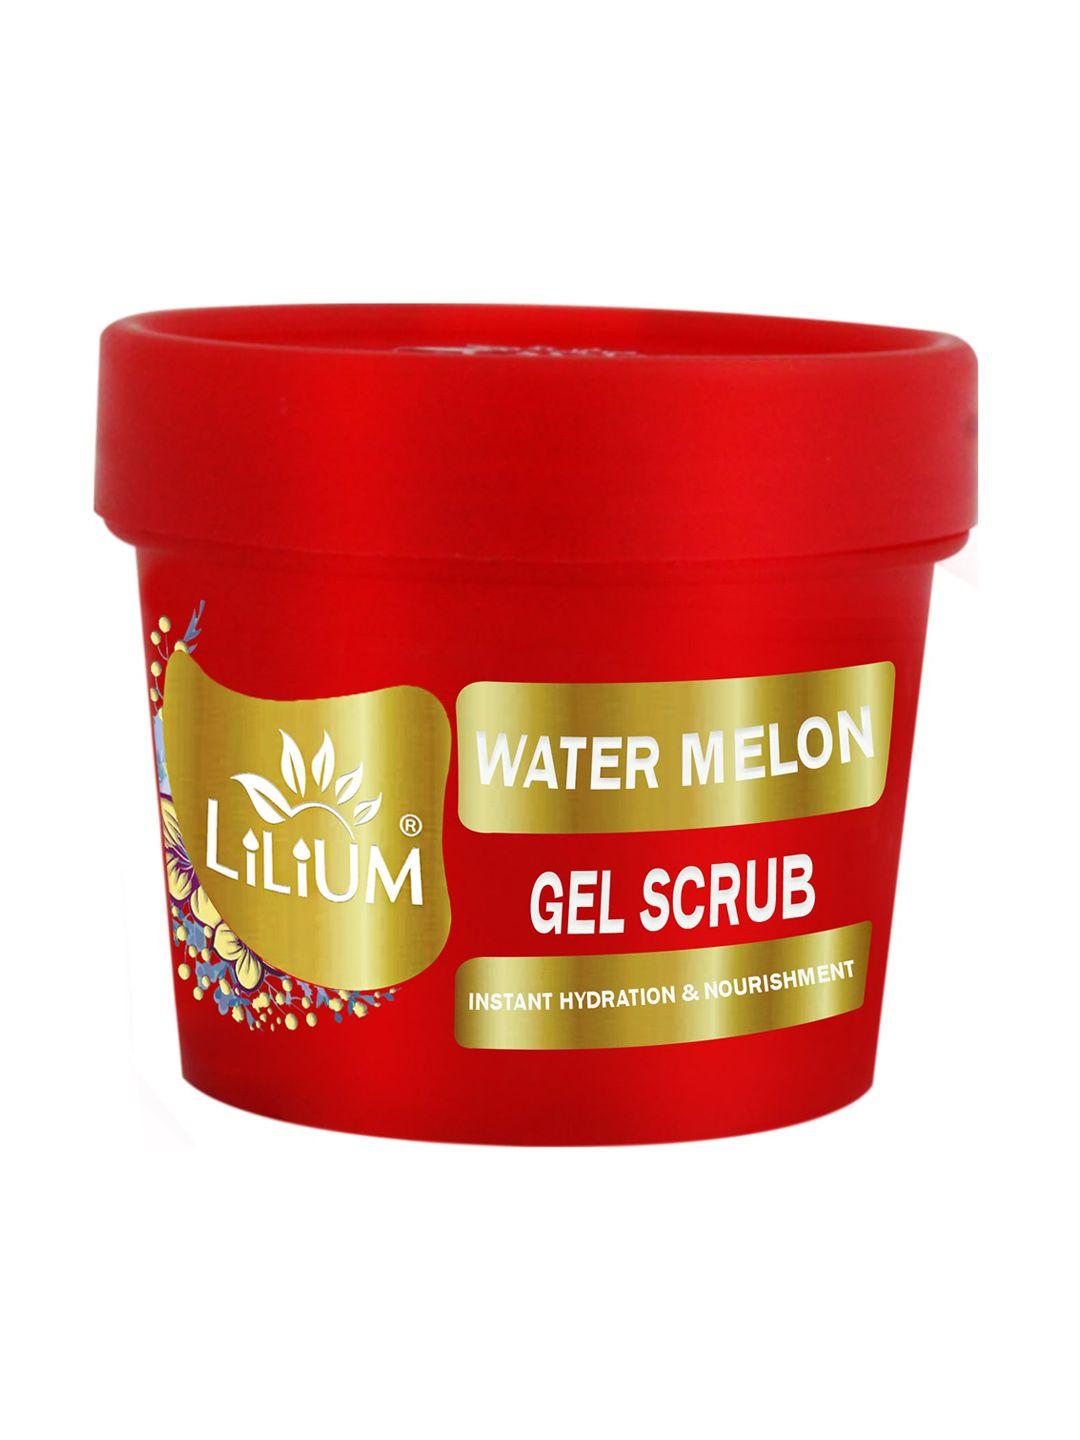 lilium watermelon scrub for instant hydration & nourishment - 100g